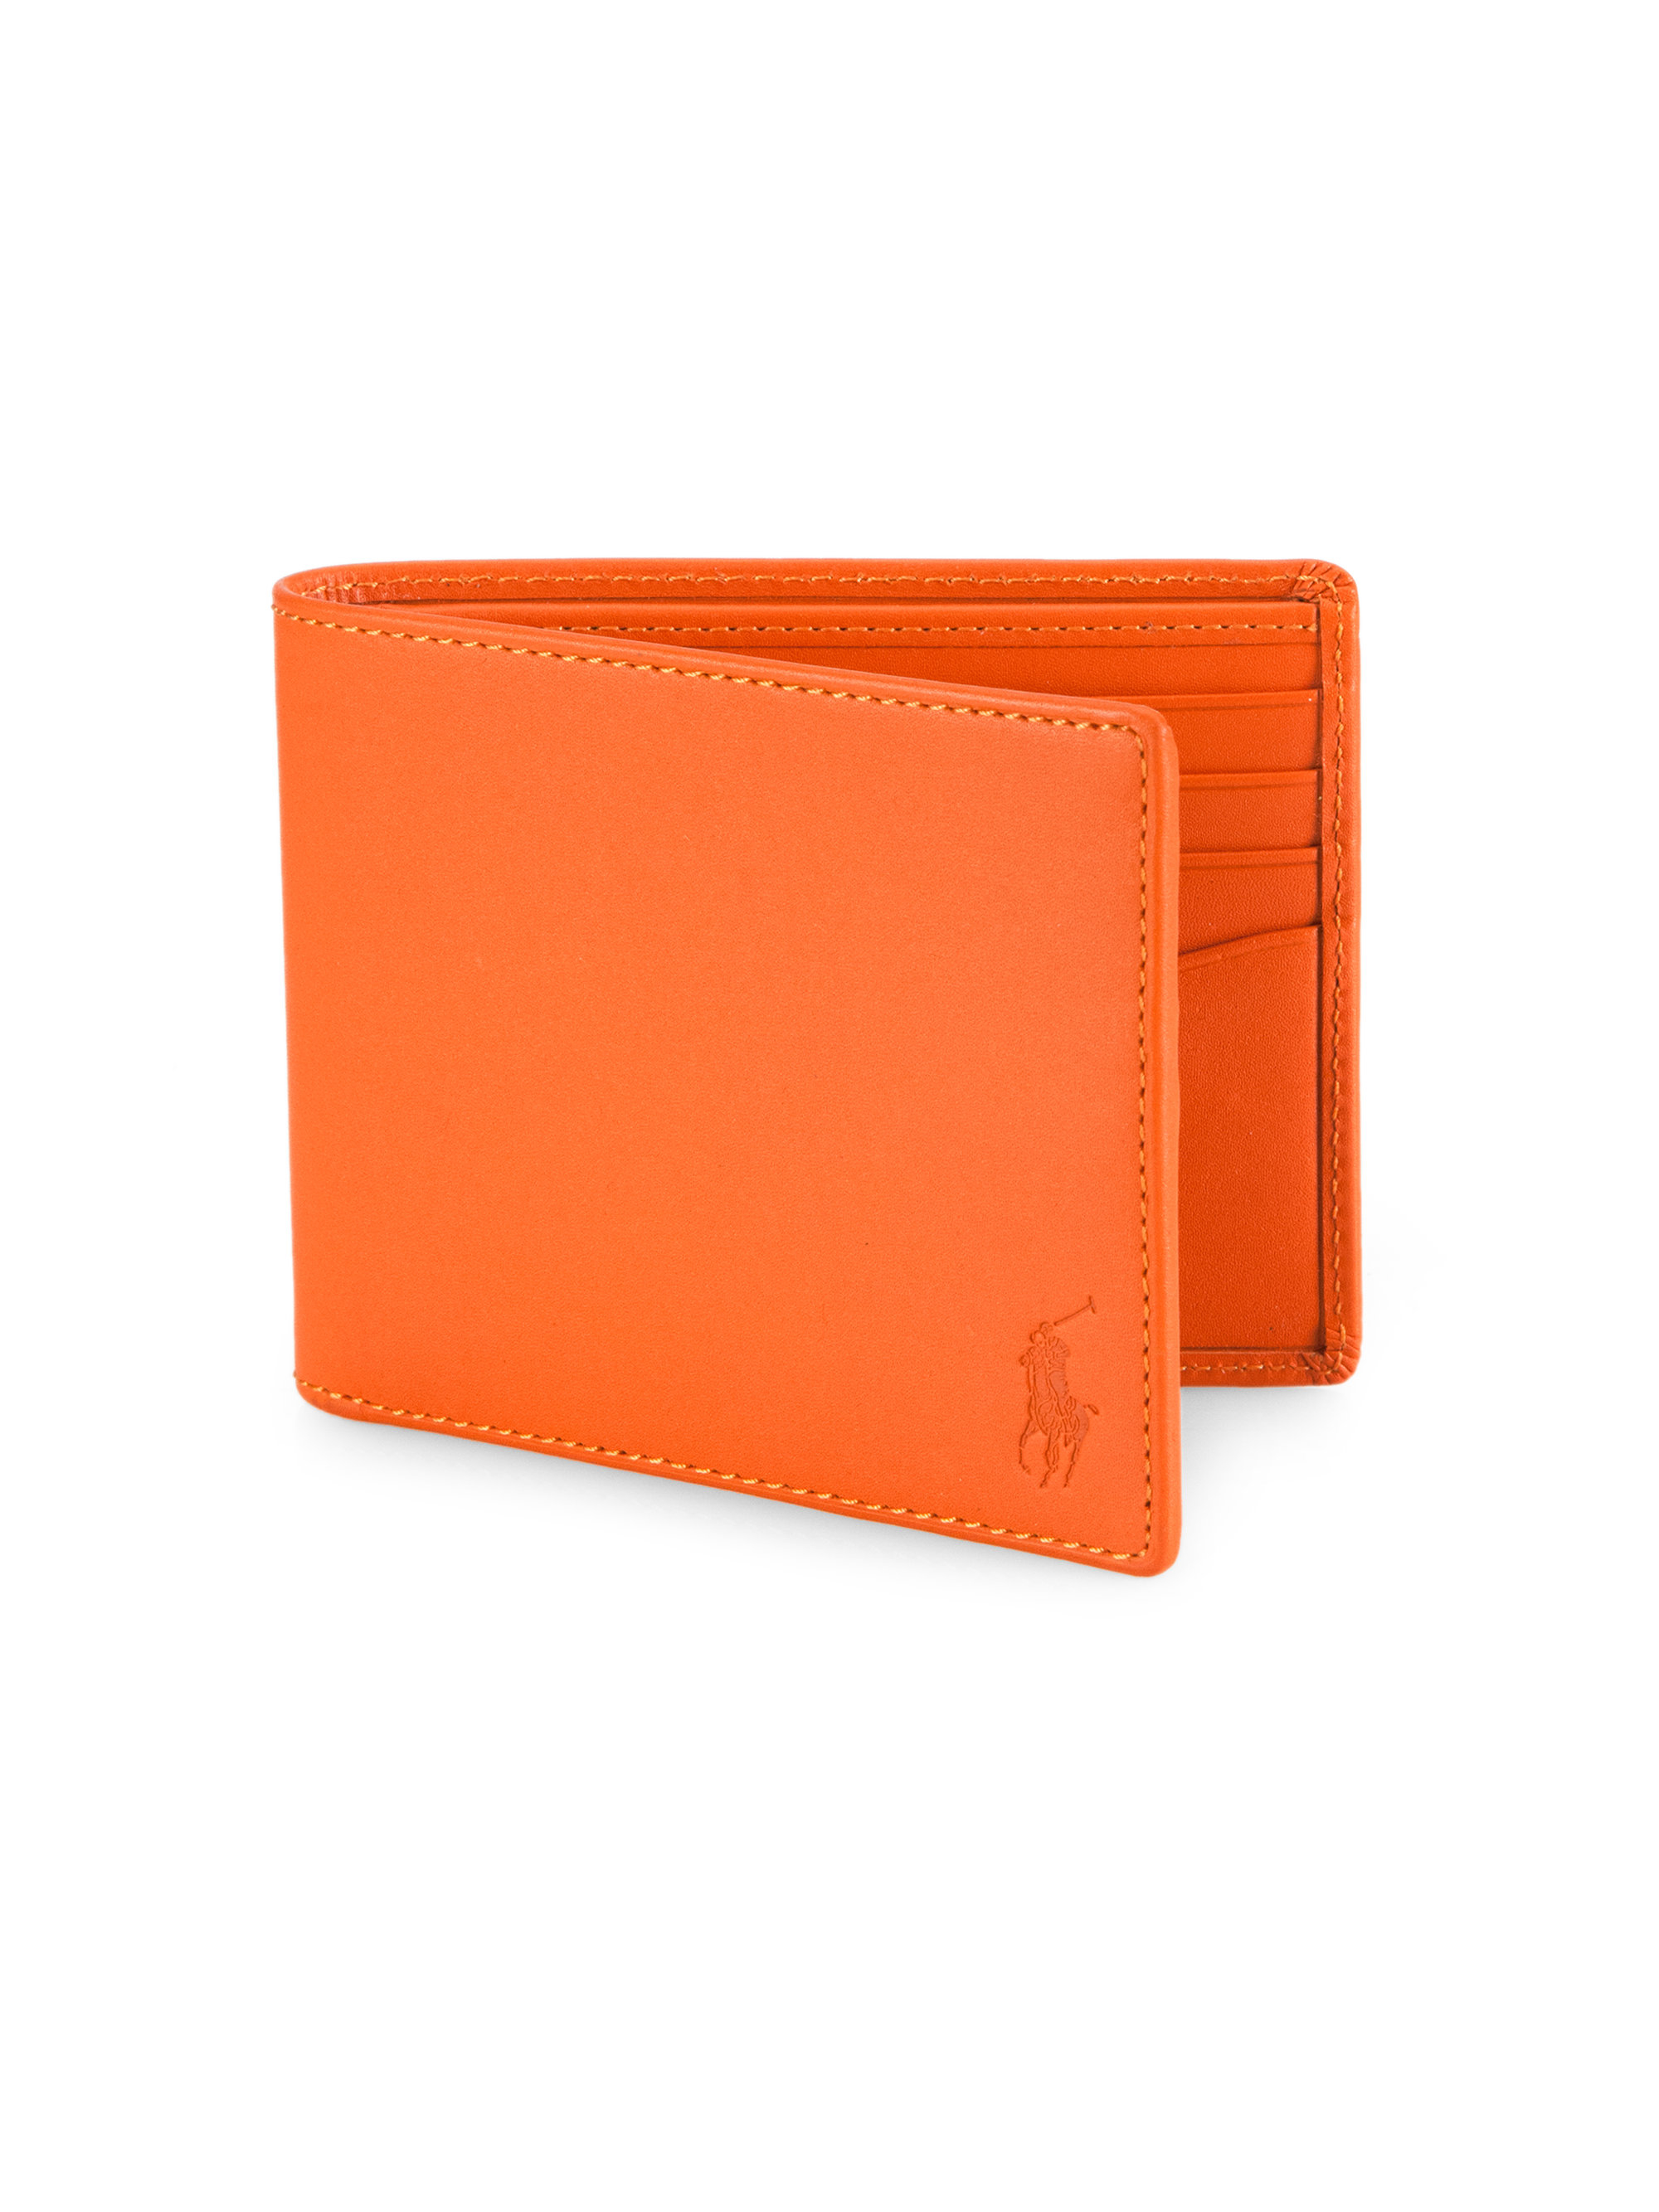 Polo Ralph Lauren Leather Billfold Wallet in Orange for Men | Lyst